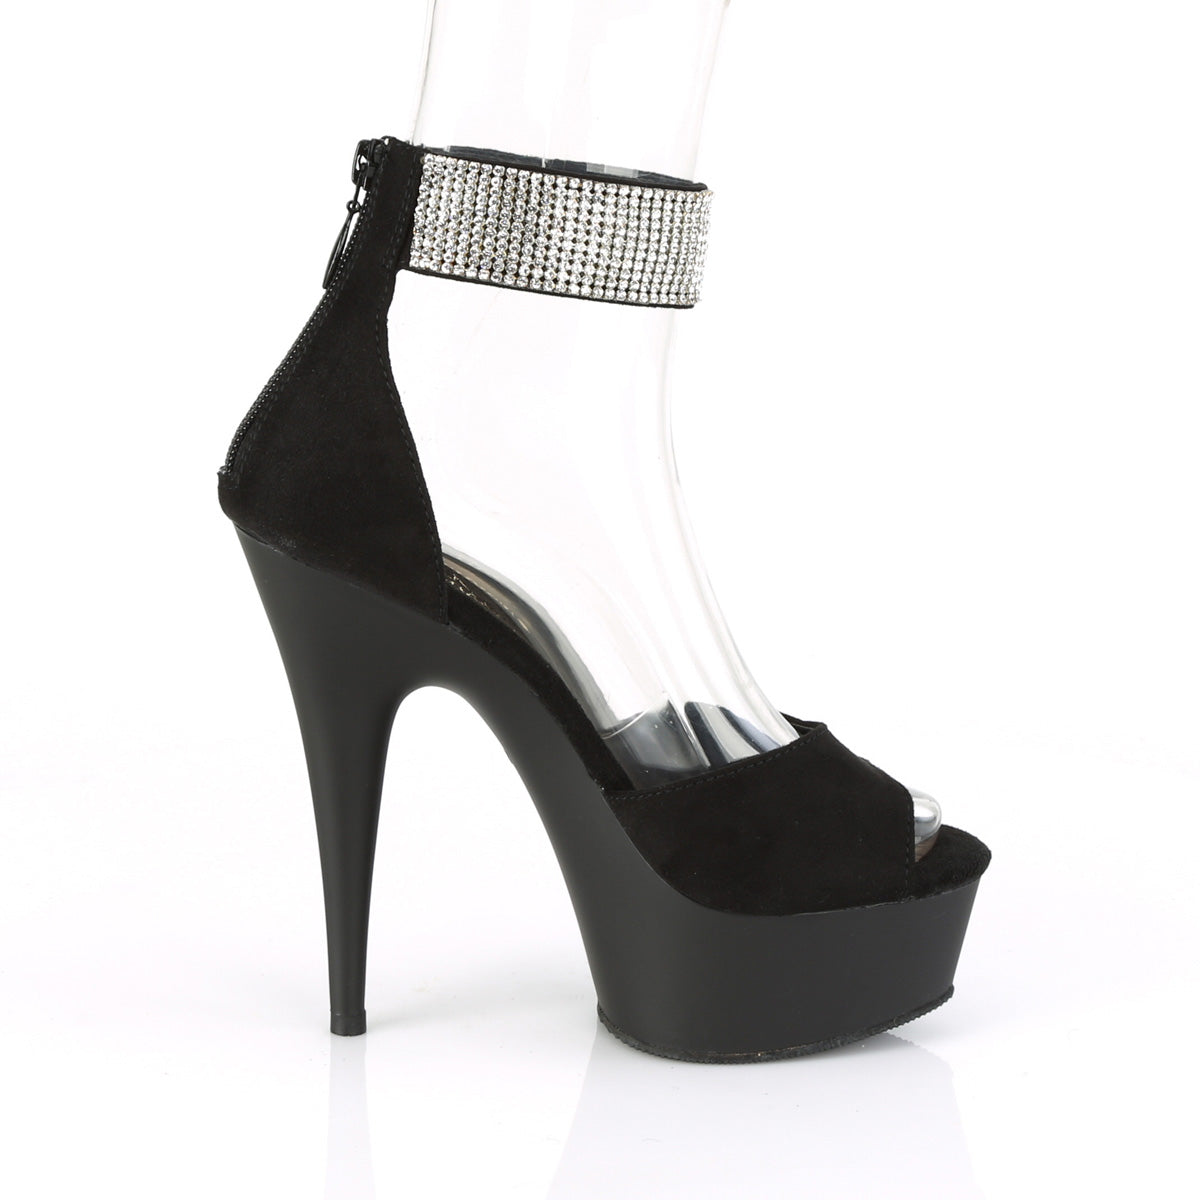 6 Inch Heel DELIGHT-625 Black Pu – Shoecup.com